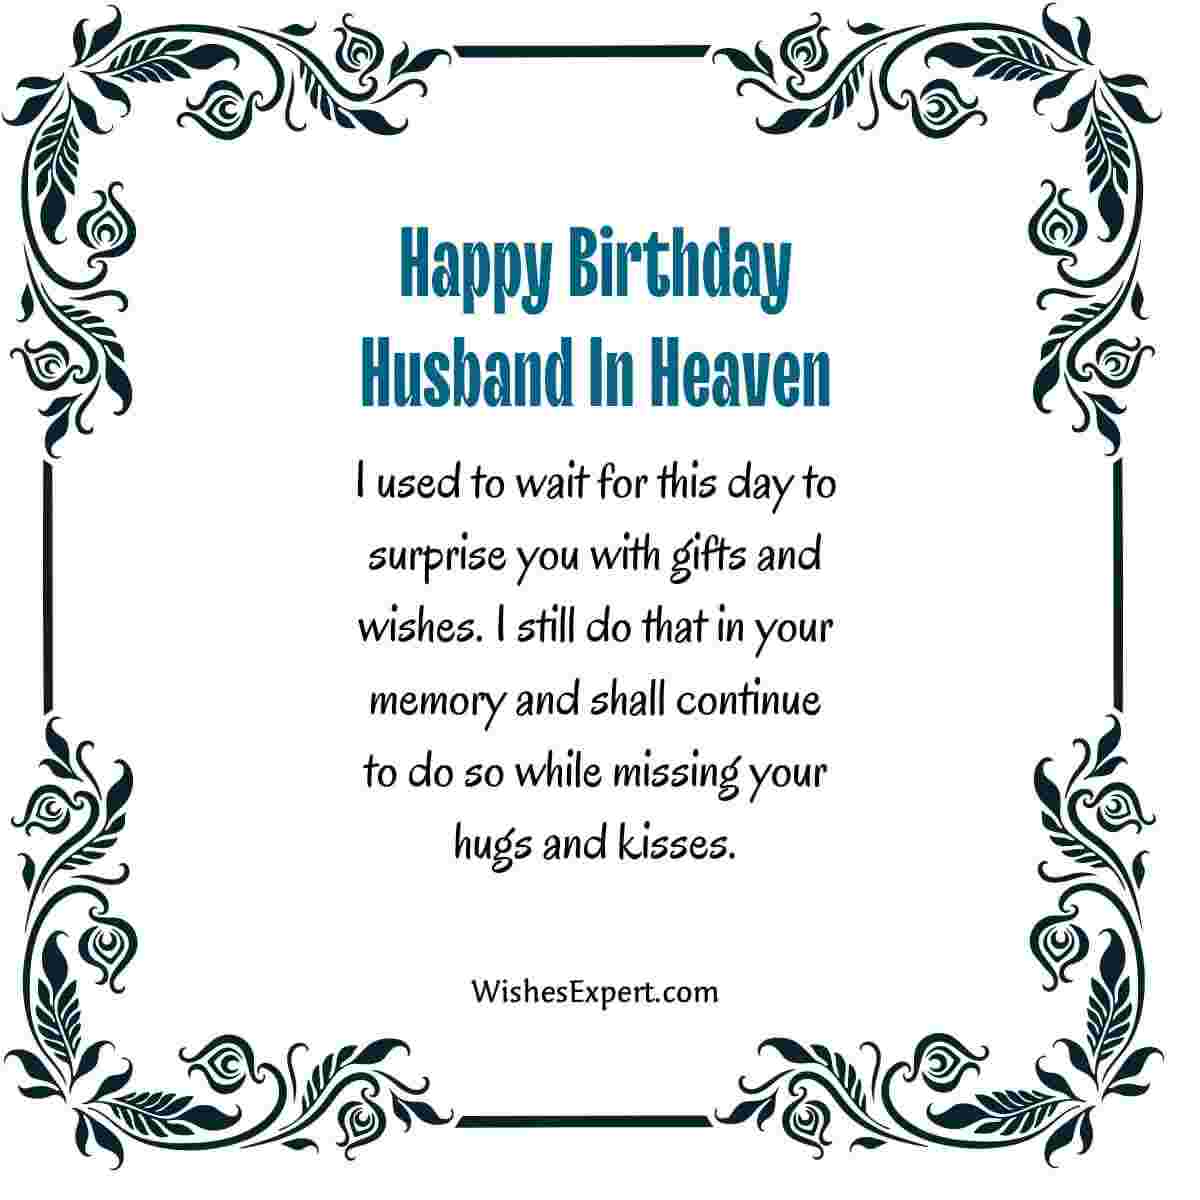 Happy Birthday in Heaven Husband